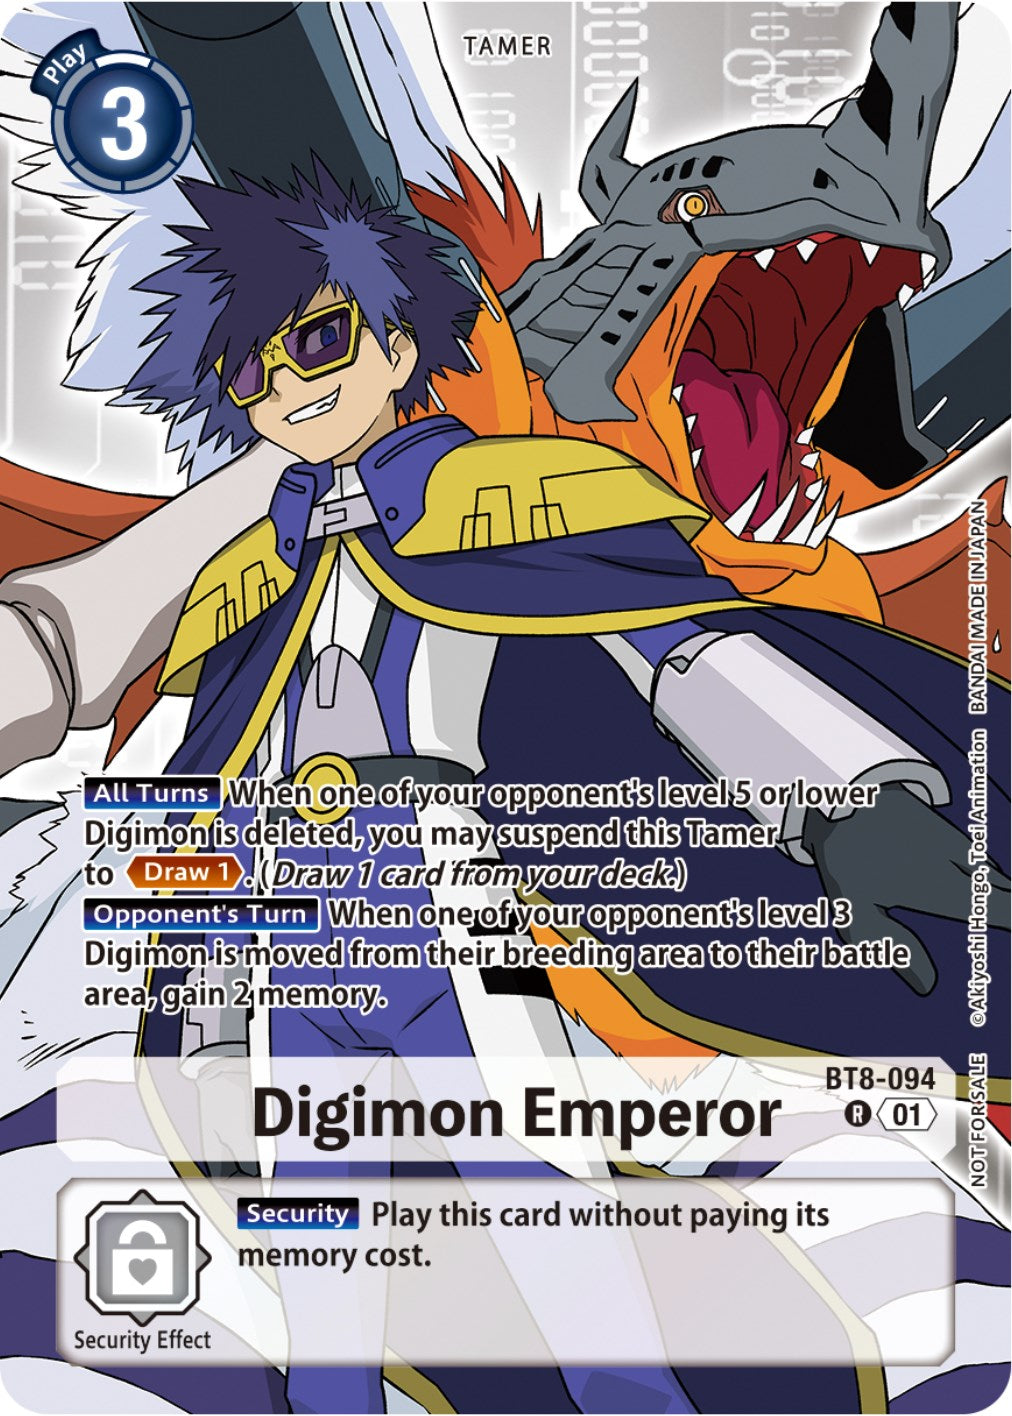 Digimon Emperor [BT8-094] (Tamer Party Pack -The Beginning-) [New Awakening] | Red Riot Games CA